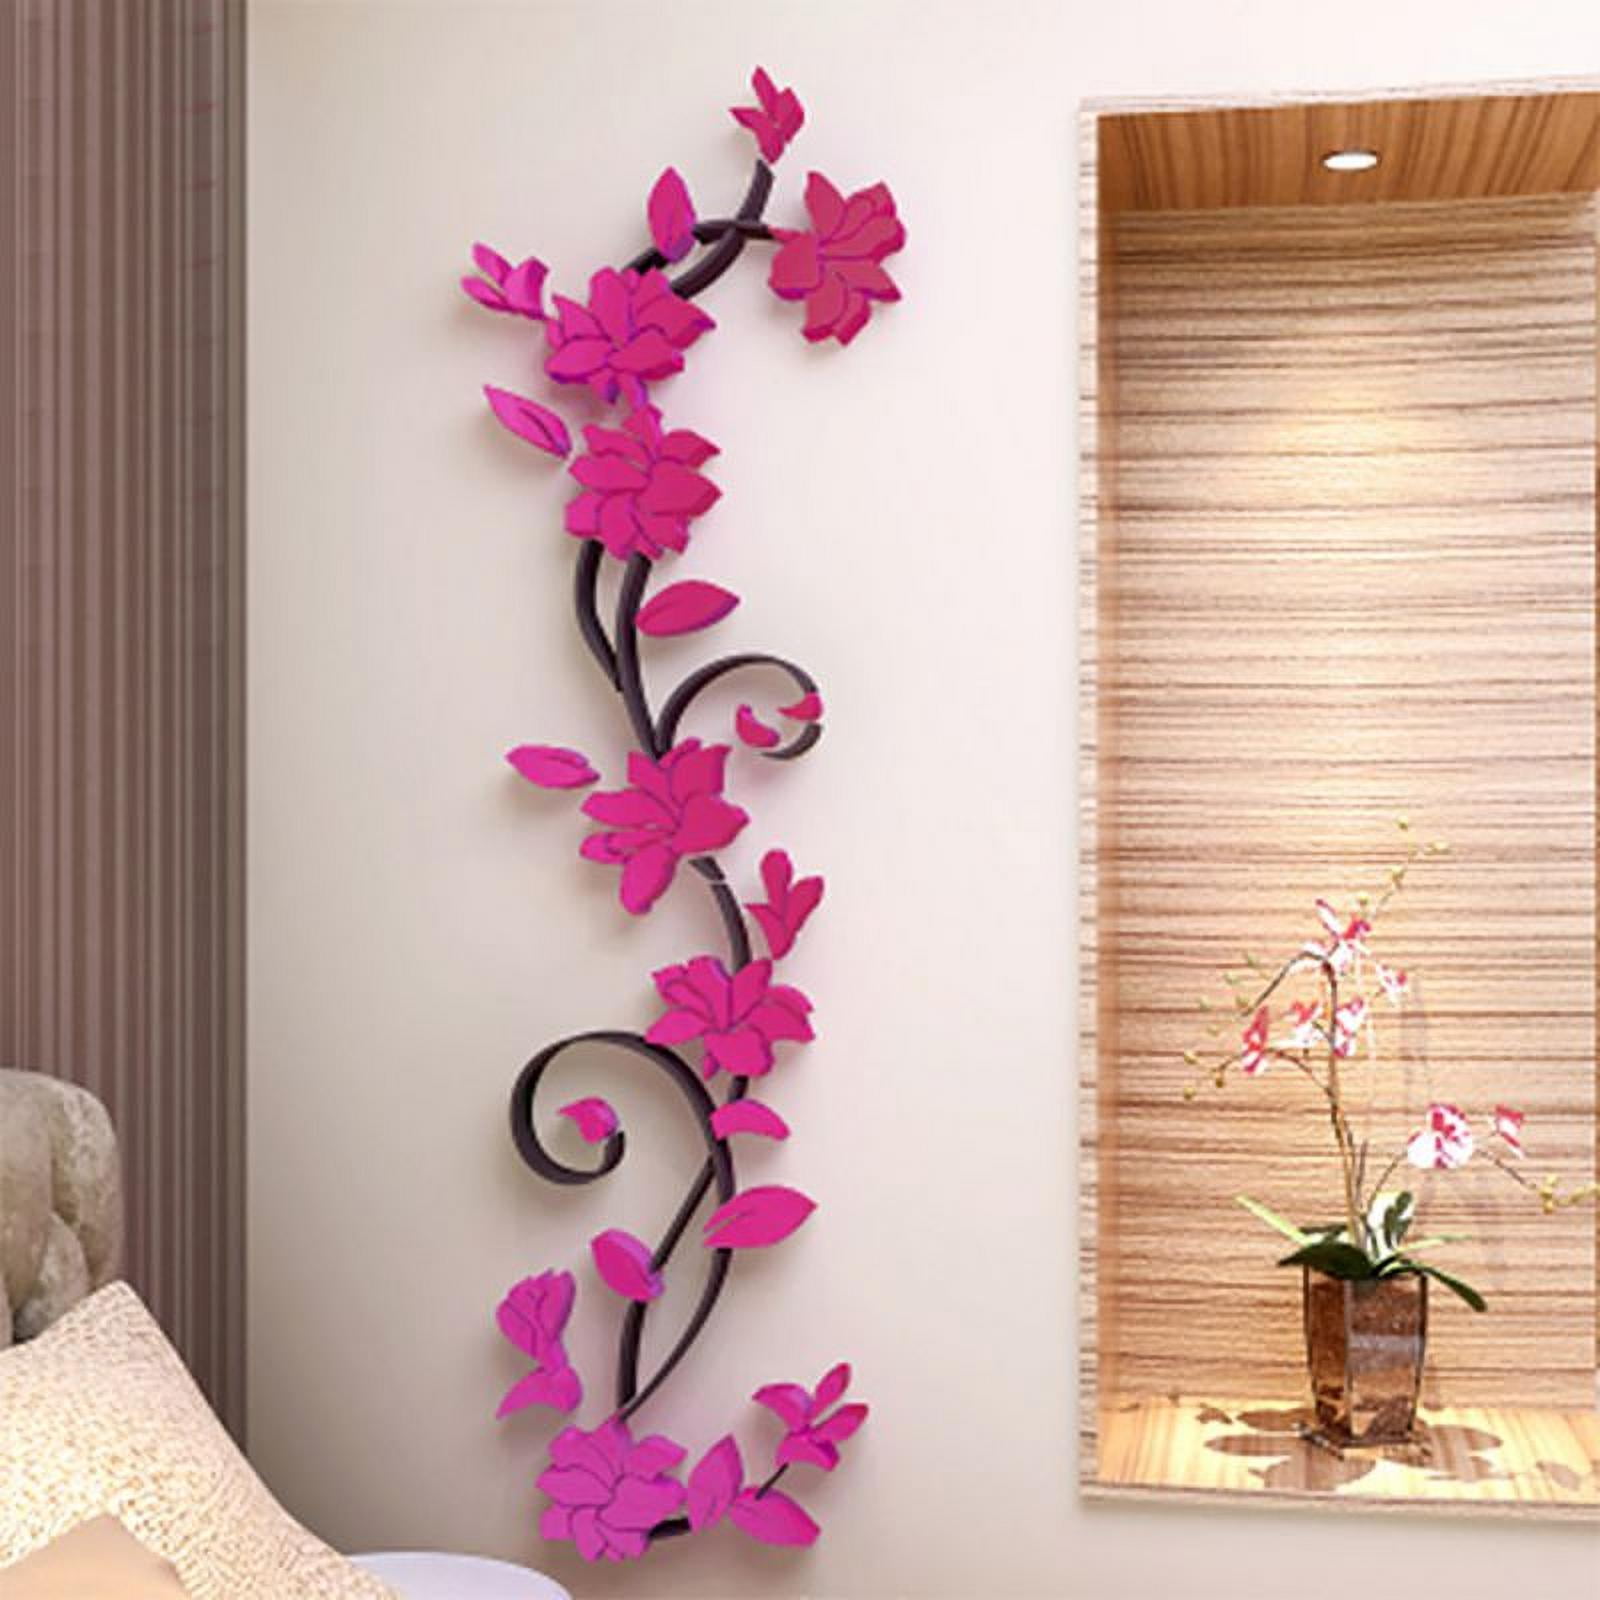 3D Mirror Wall Sticker Flower Decal Removable Art Mural Decoration 